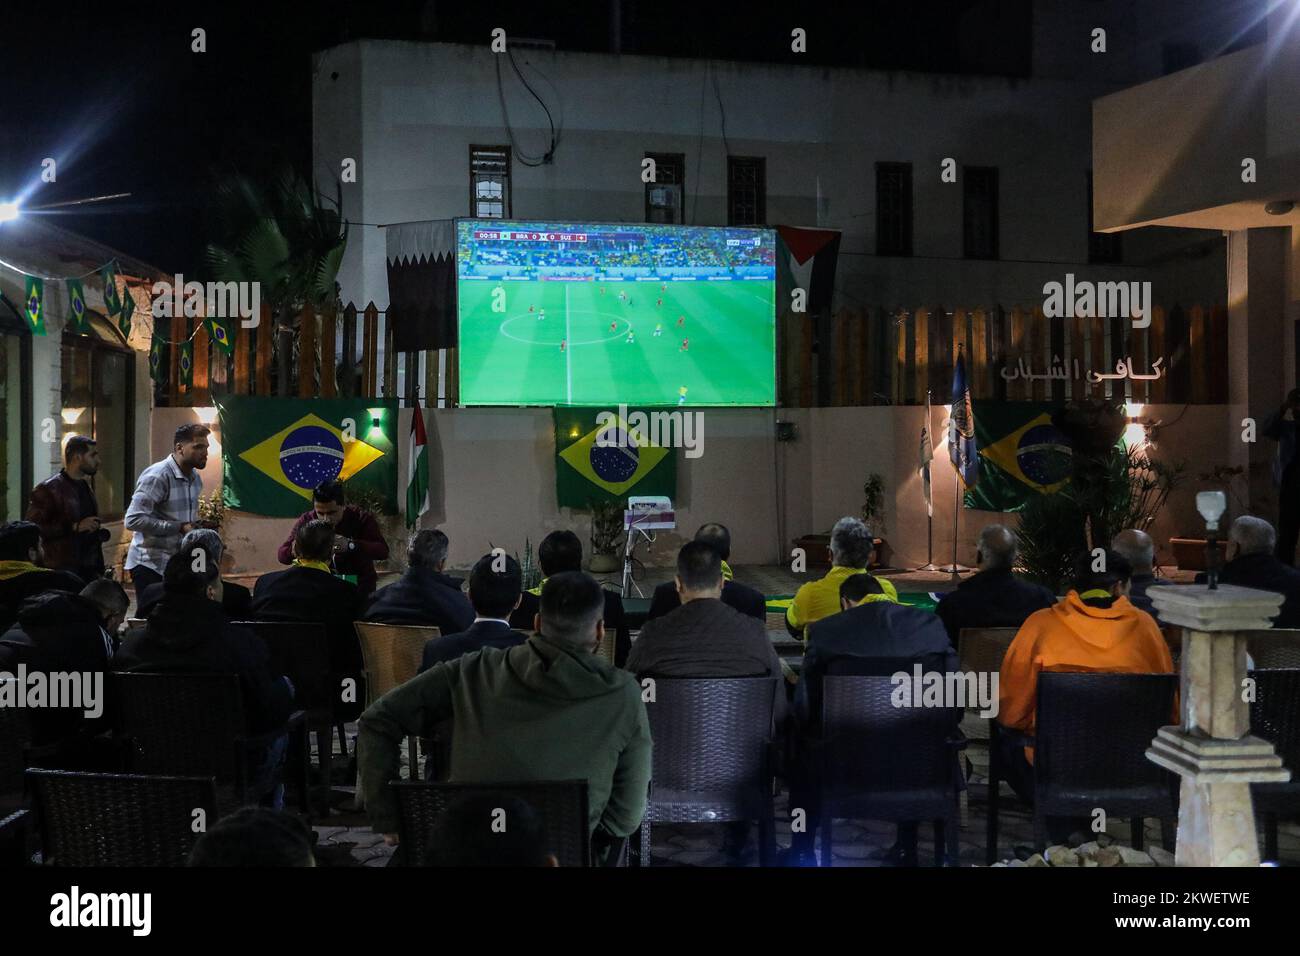 Brazilian Ambassador to Palestine watch the Brazil national team match against Switzerland in 2022 World Cup in Qatar,i n Gaza Strip, Nov 28, 2022. Stock Photo